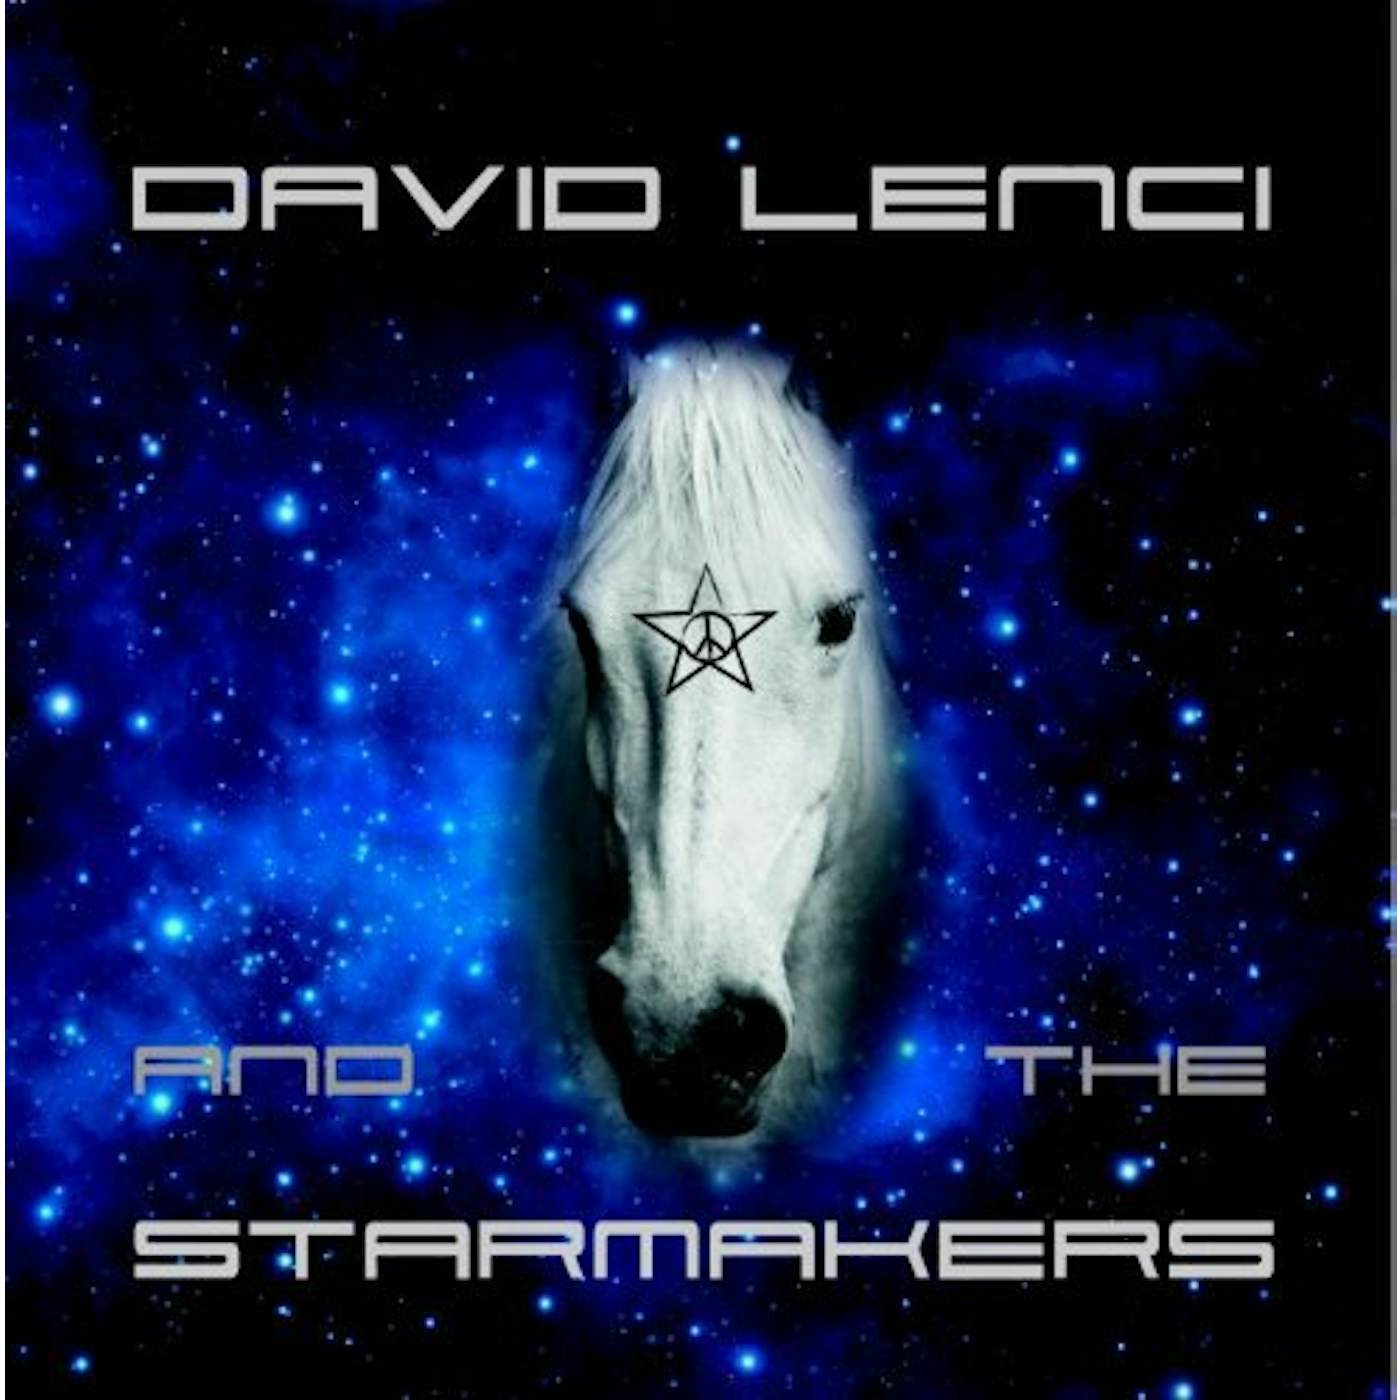 David Lenci & Starmakers DAVID LENCI & THE STARMAKERS Vinyl Record